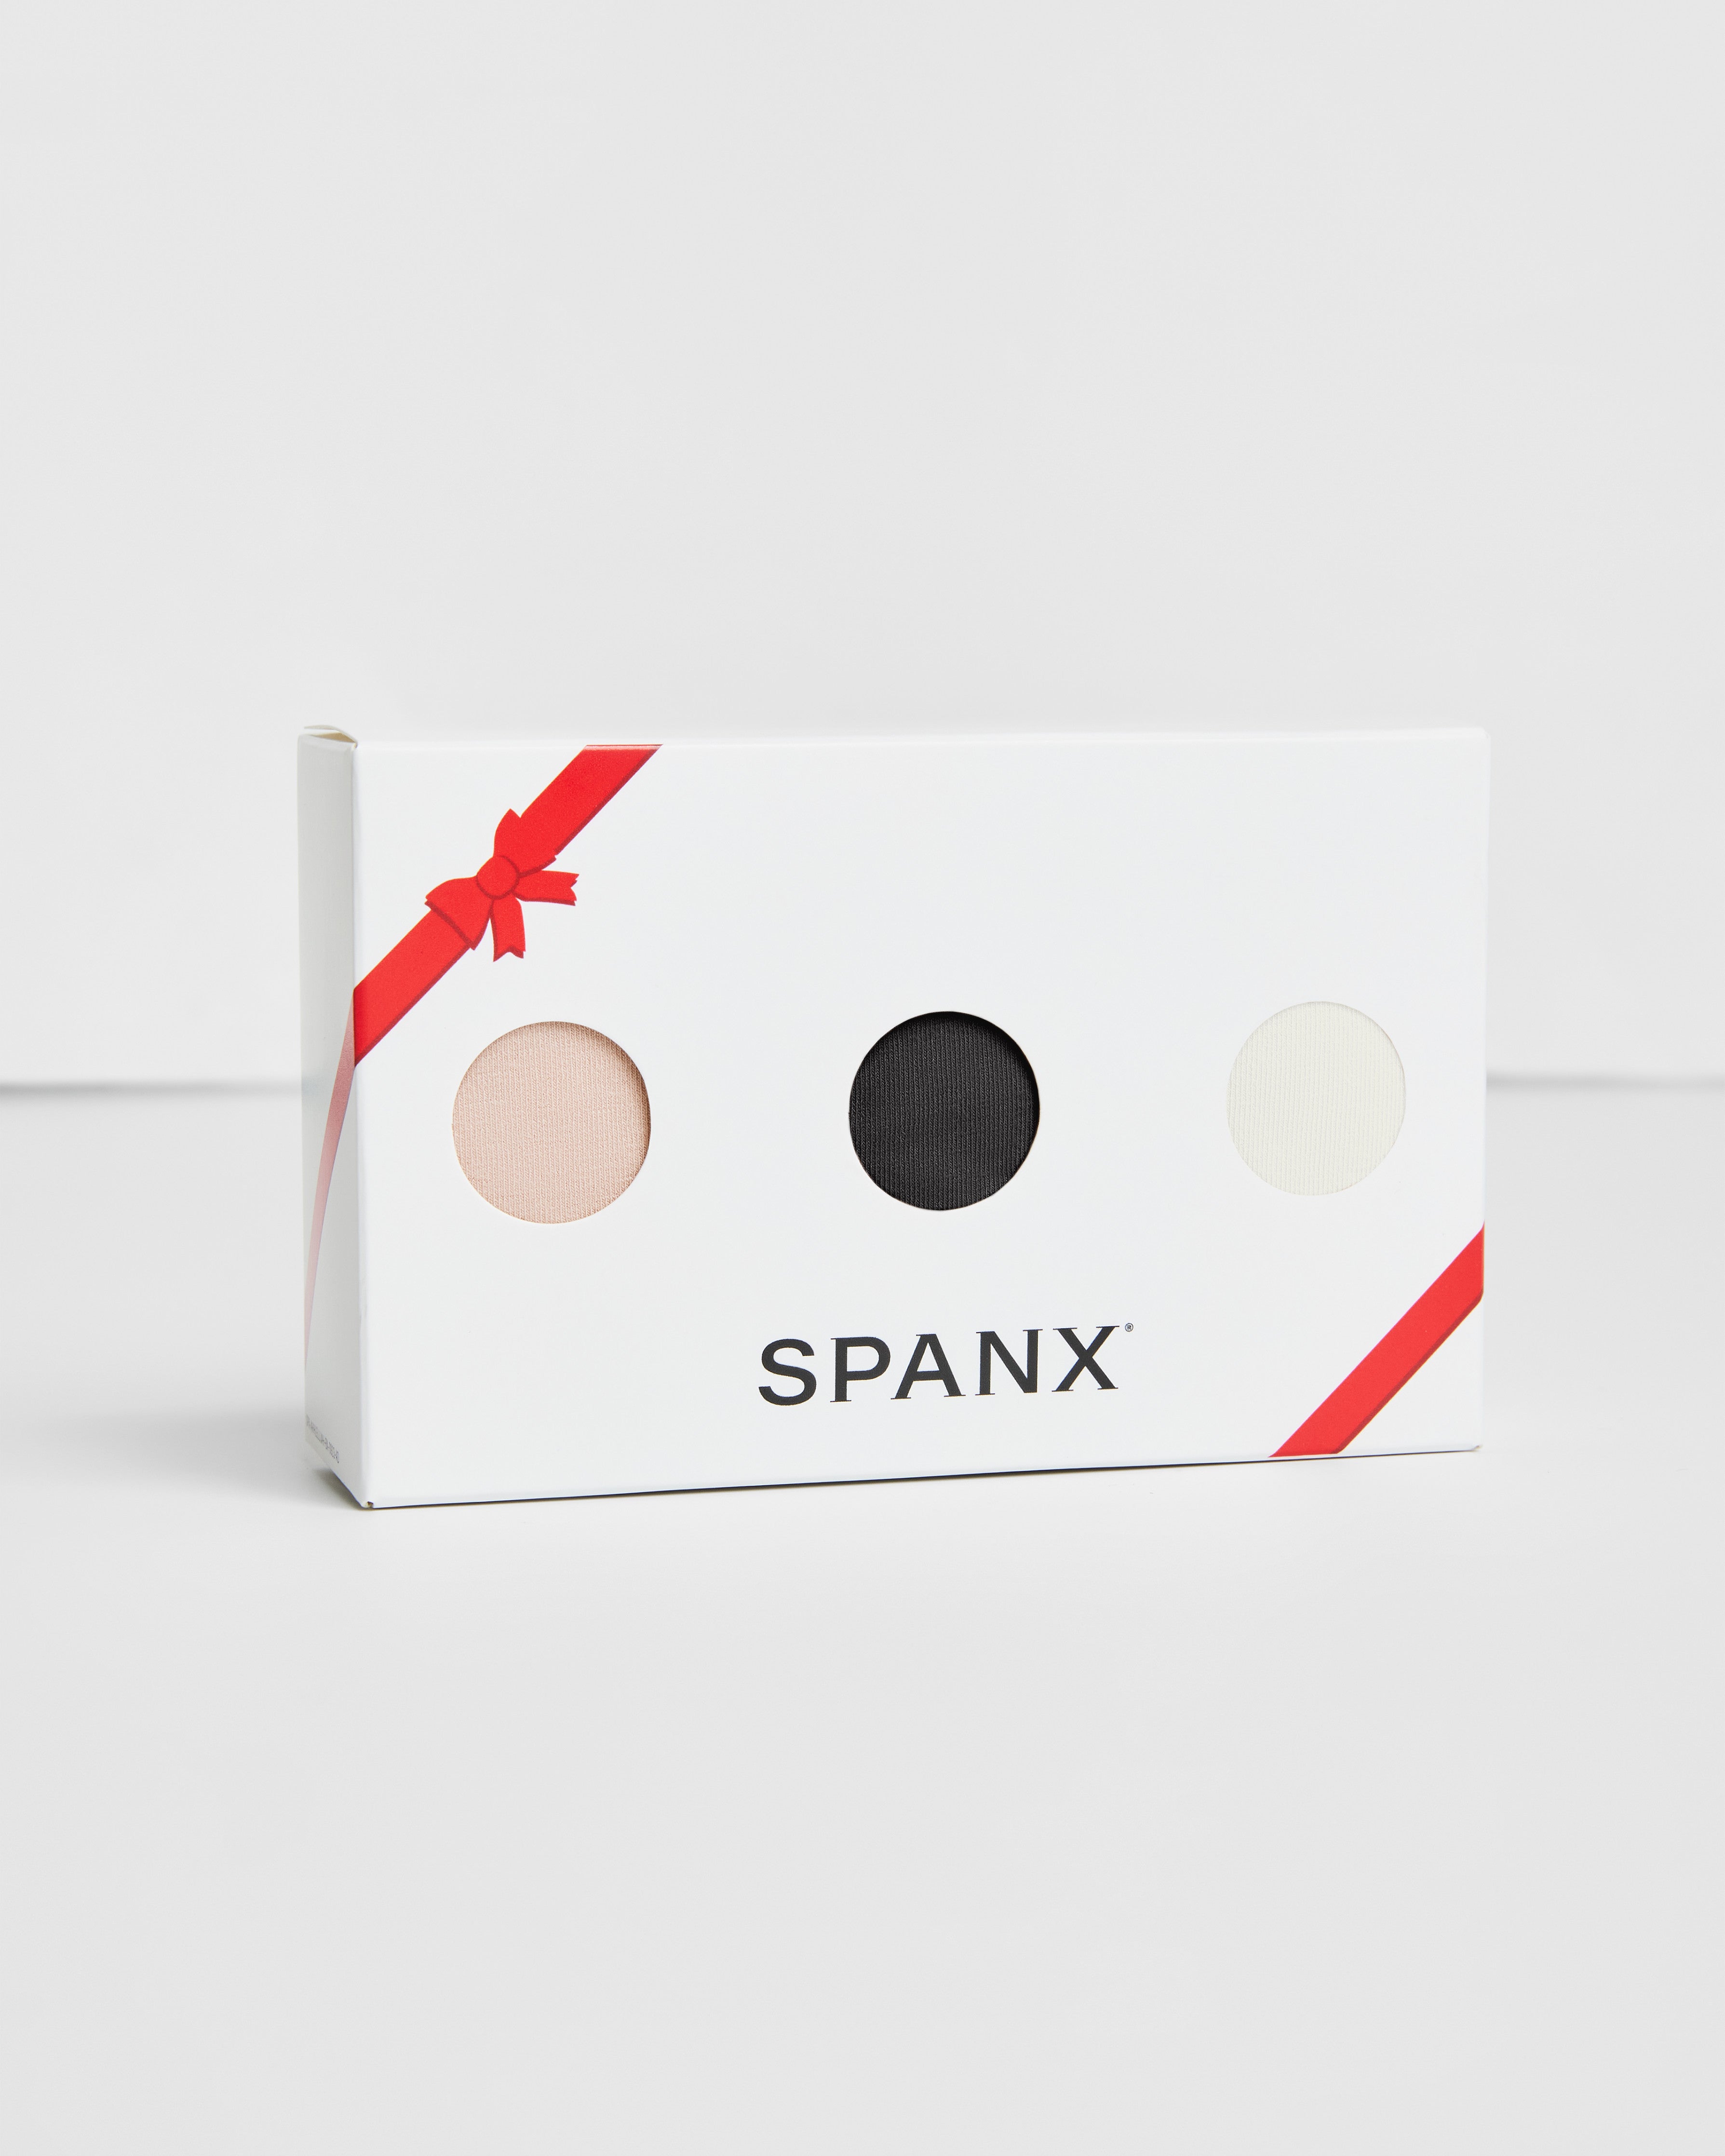 SPANX, Intimates & Sleepwear, Spanx Brand New In Packaging